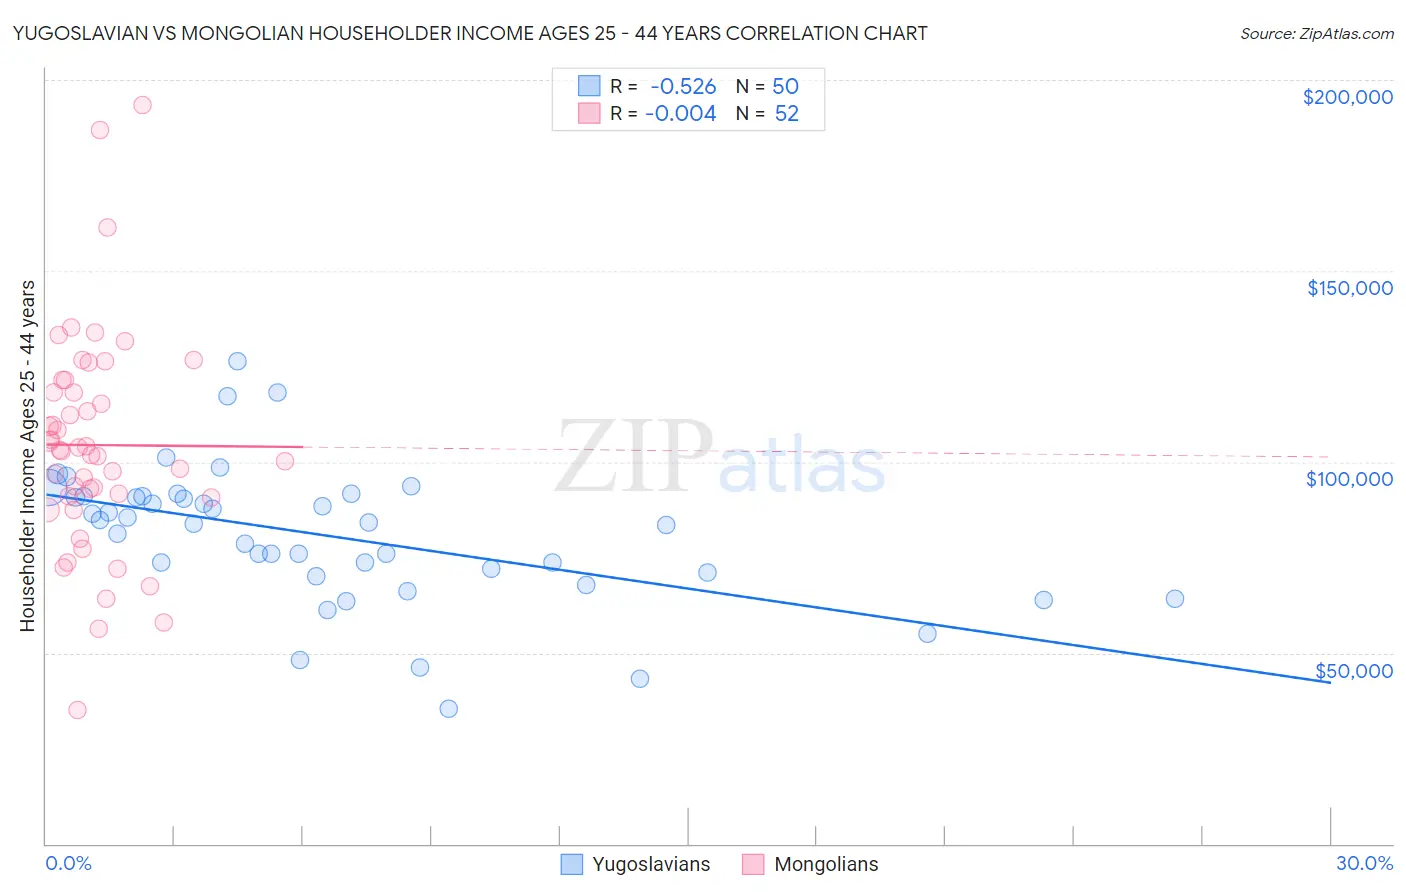 Yugoslavian vs Mongolian Householder Income Ages 25 - 44 years